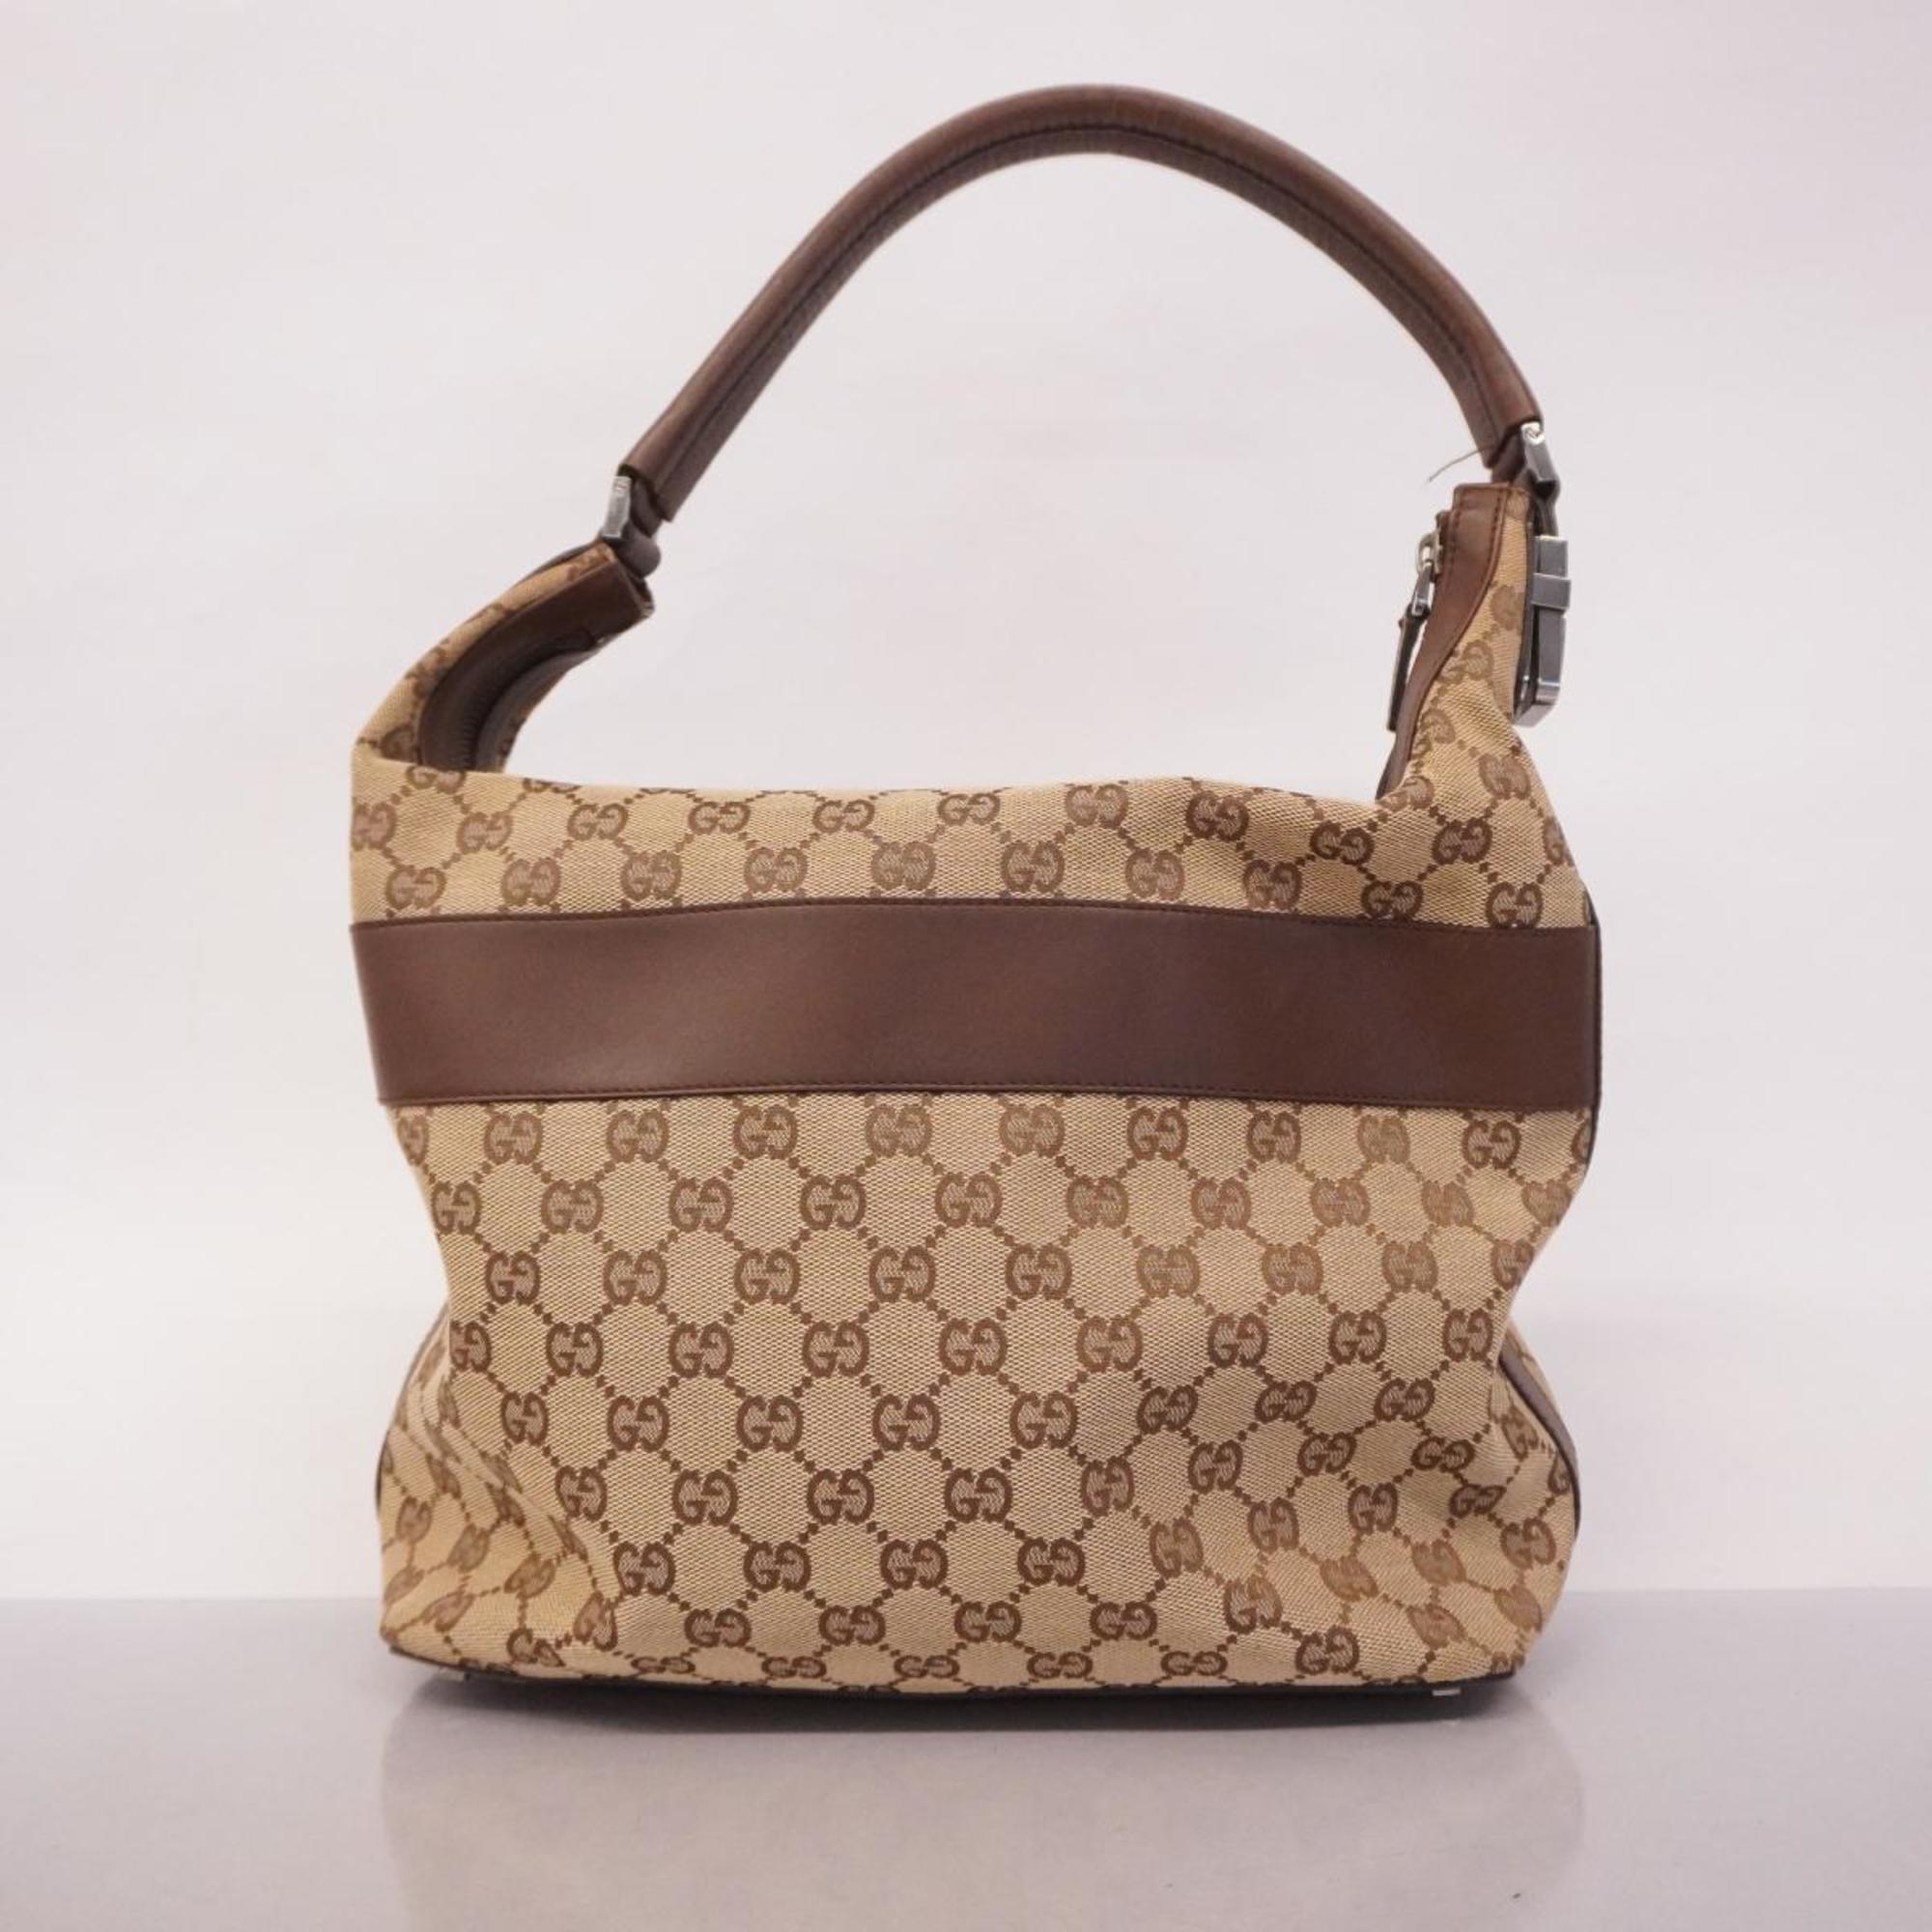 Gucci Shoulder Bag GG Canvas 001 4298 Brown Women's